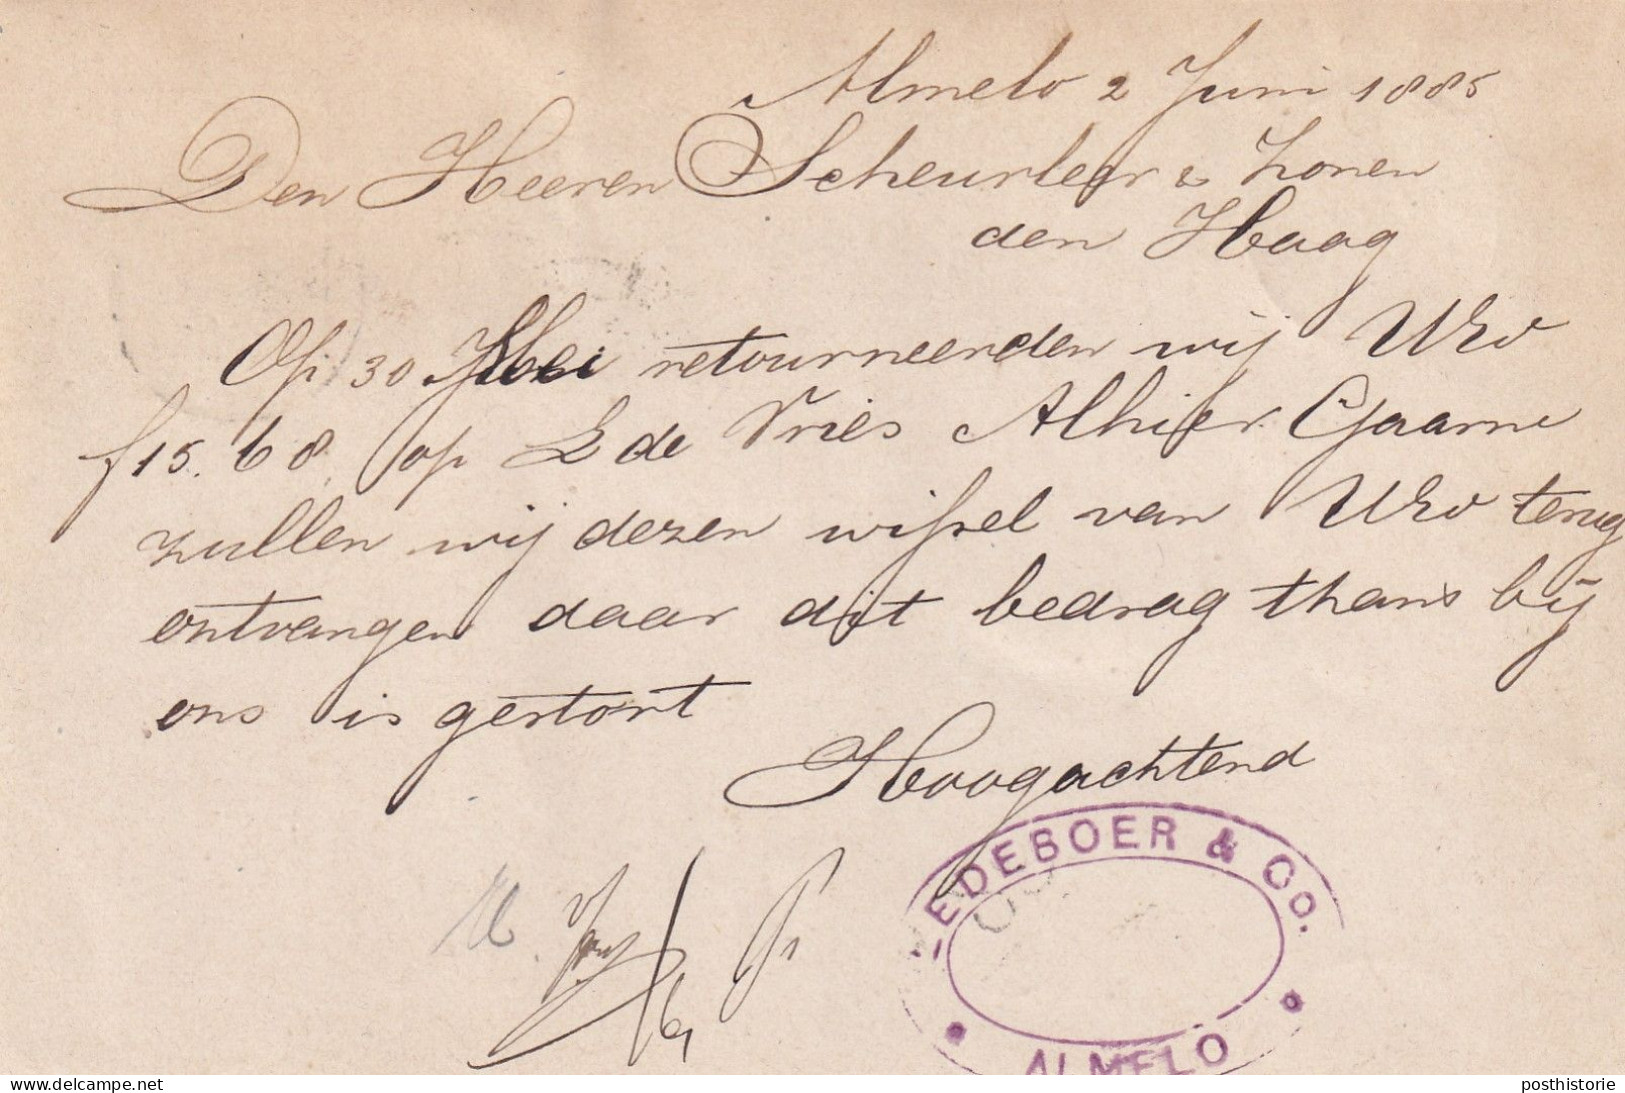 Briefkaart Met Firma Stempel 2 Jun 1885 Almelo (kleinrond) Naar 's Gravenhage (kleinrond) - Postal History